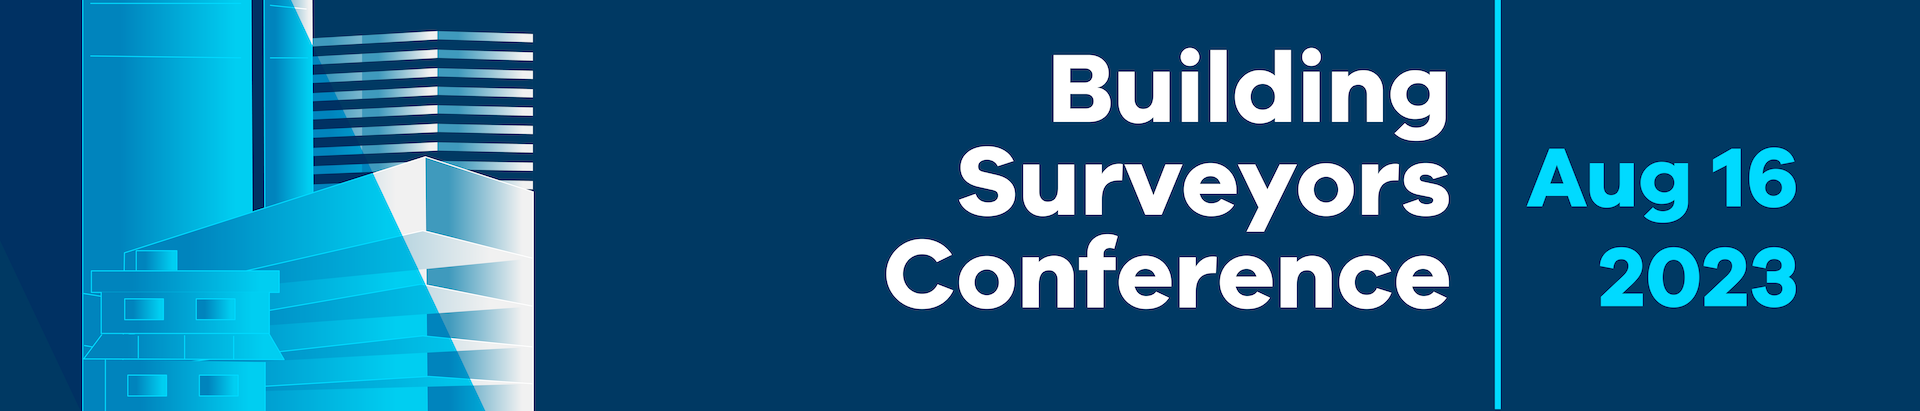 Building Surveyors conference 2023 banner